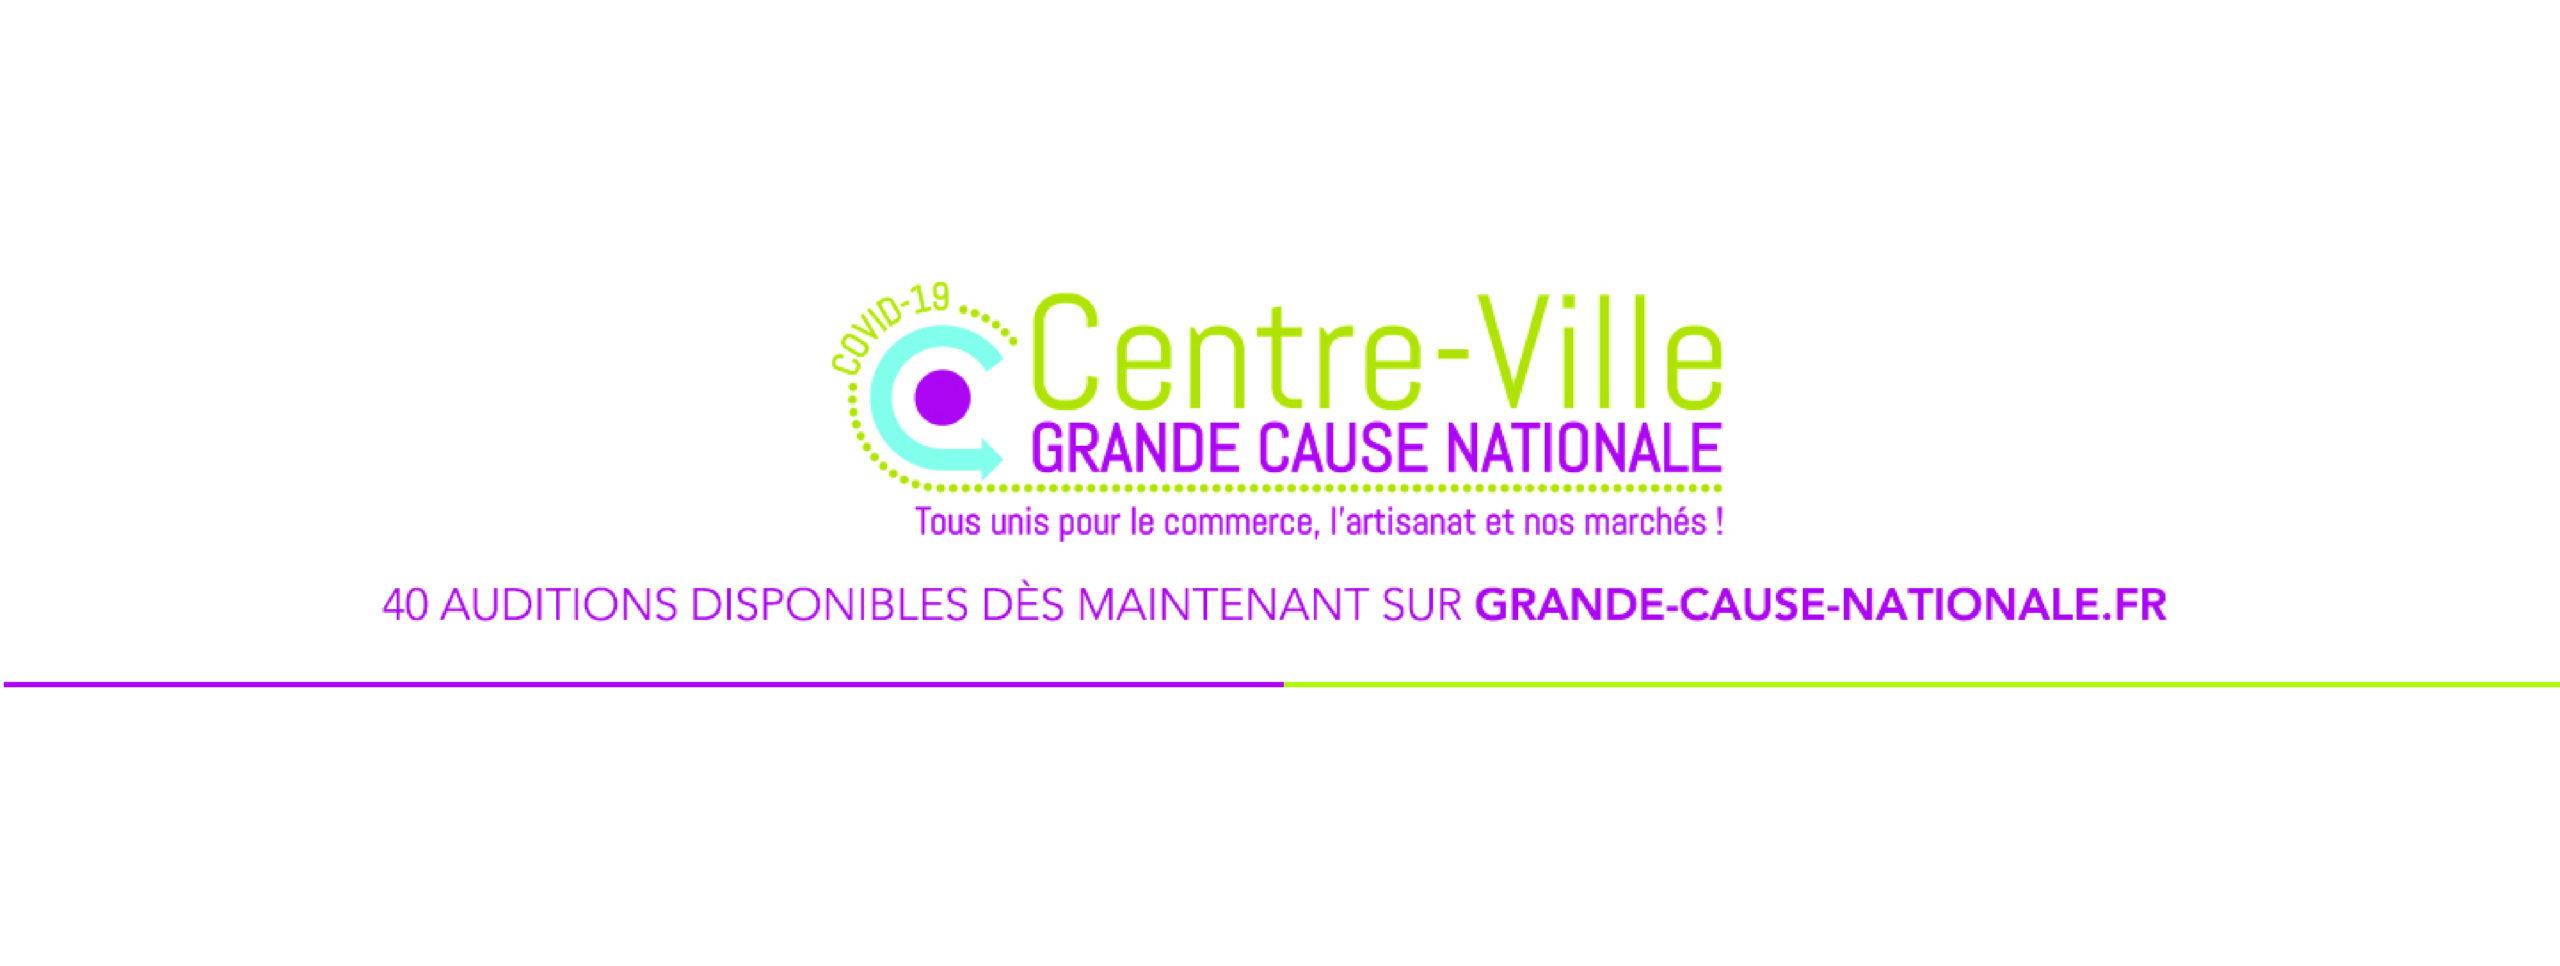 Centre-Ville, Grande Cause Nationale